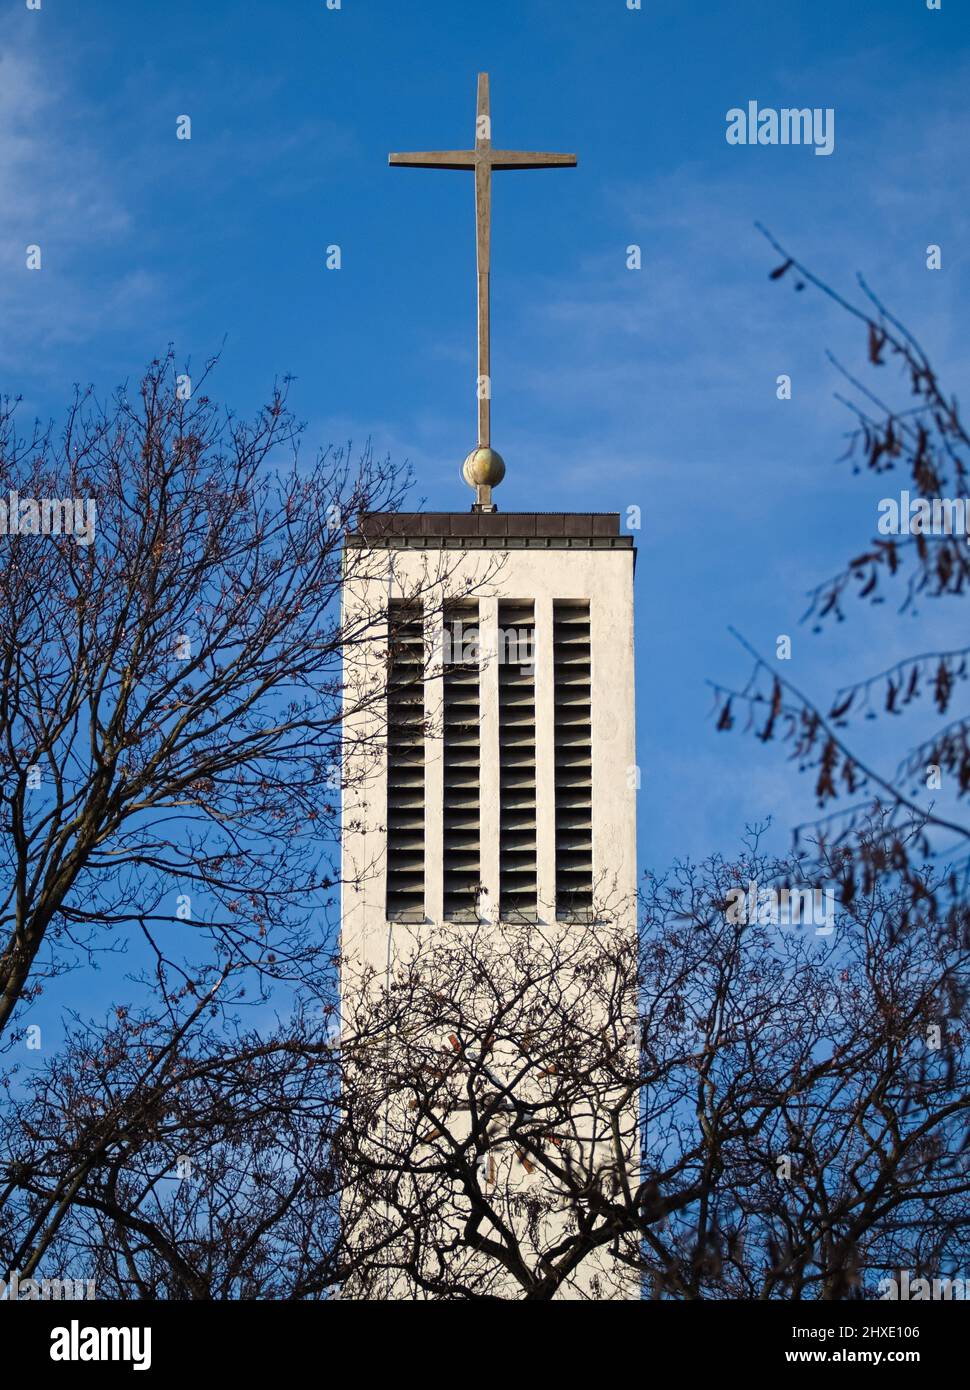 Modern Church Tower with Big Metal Cross Stock Photo